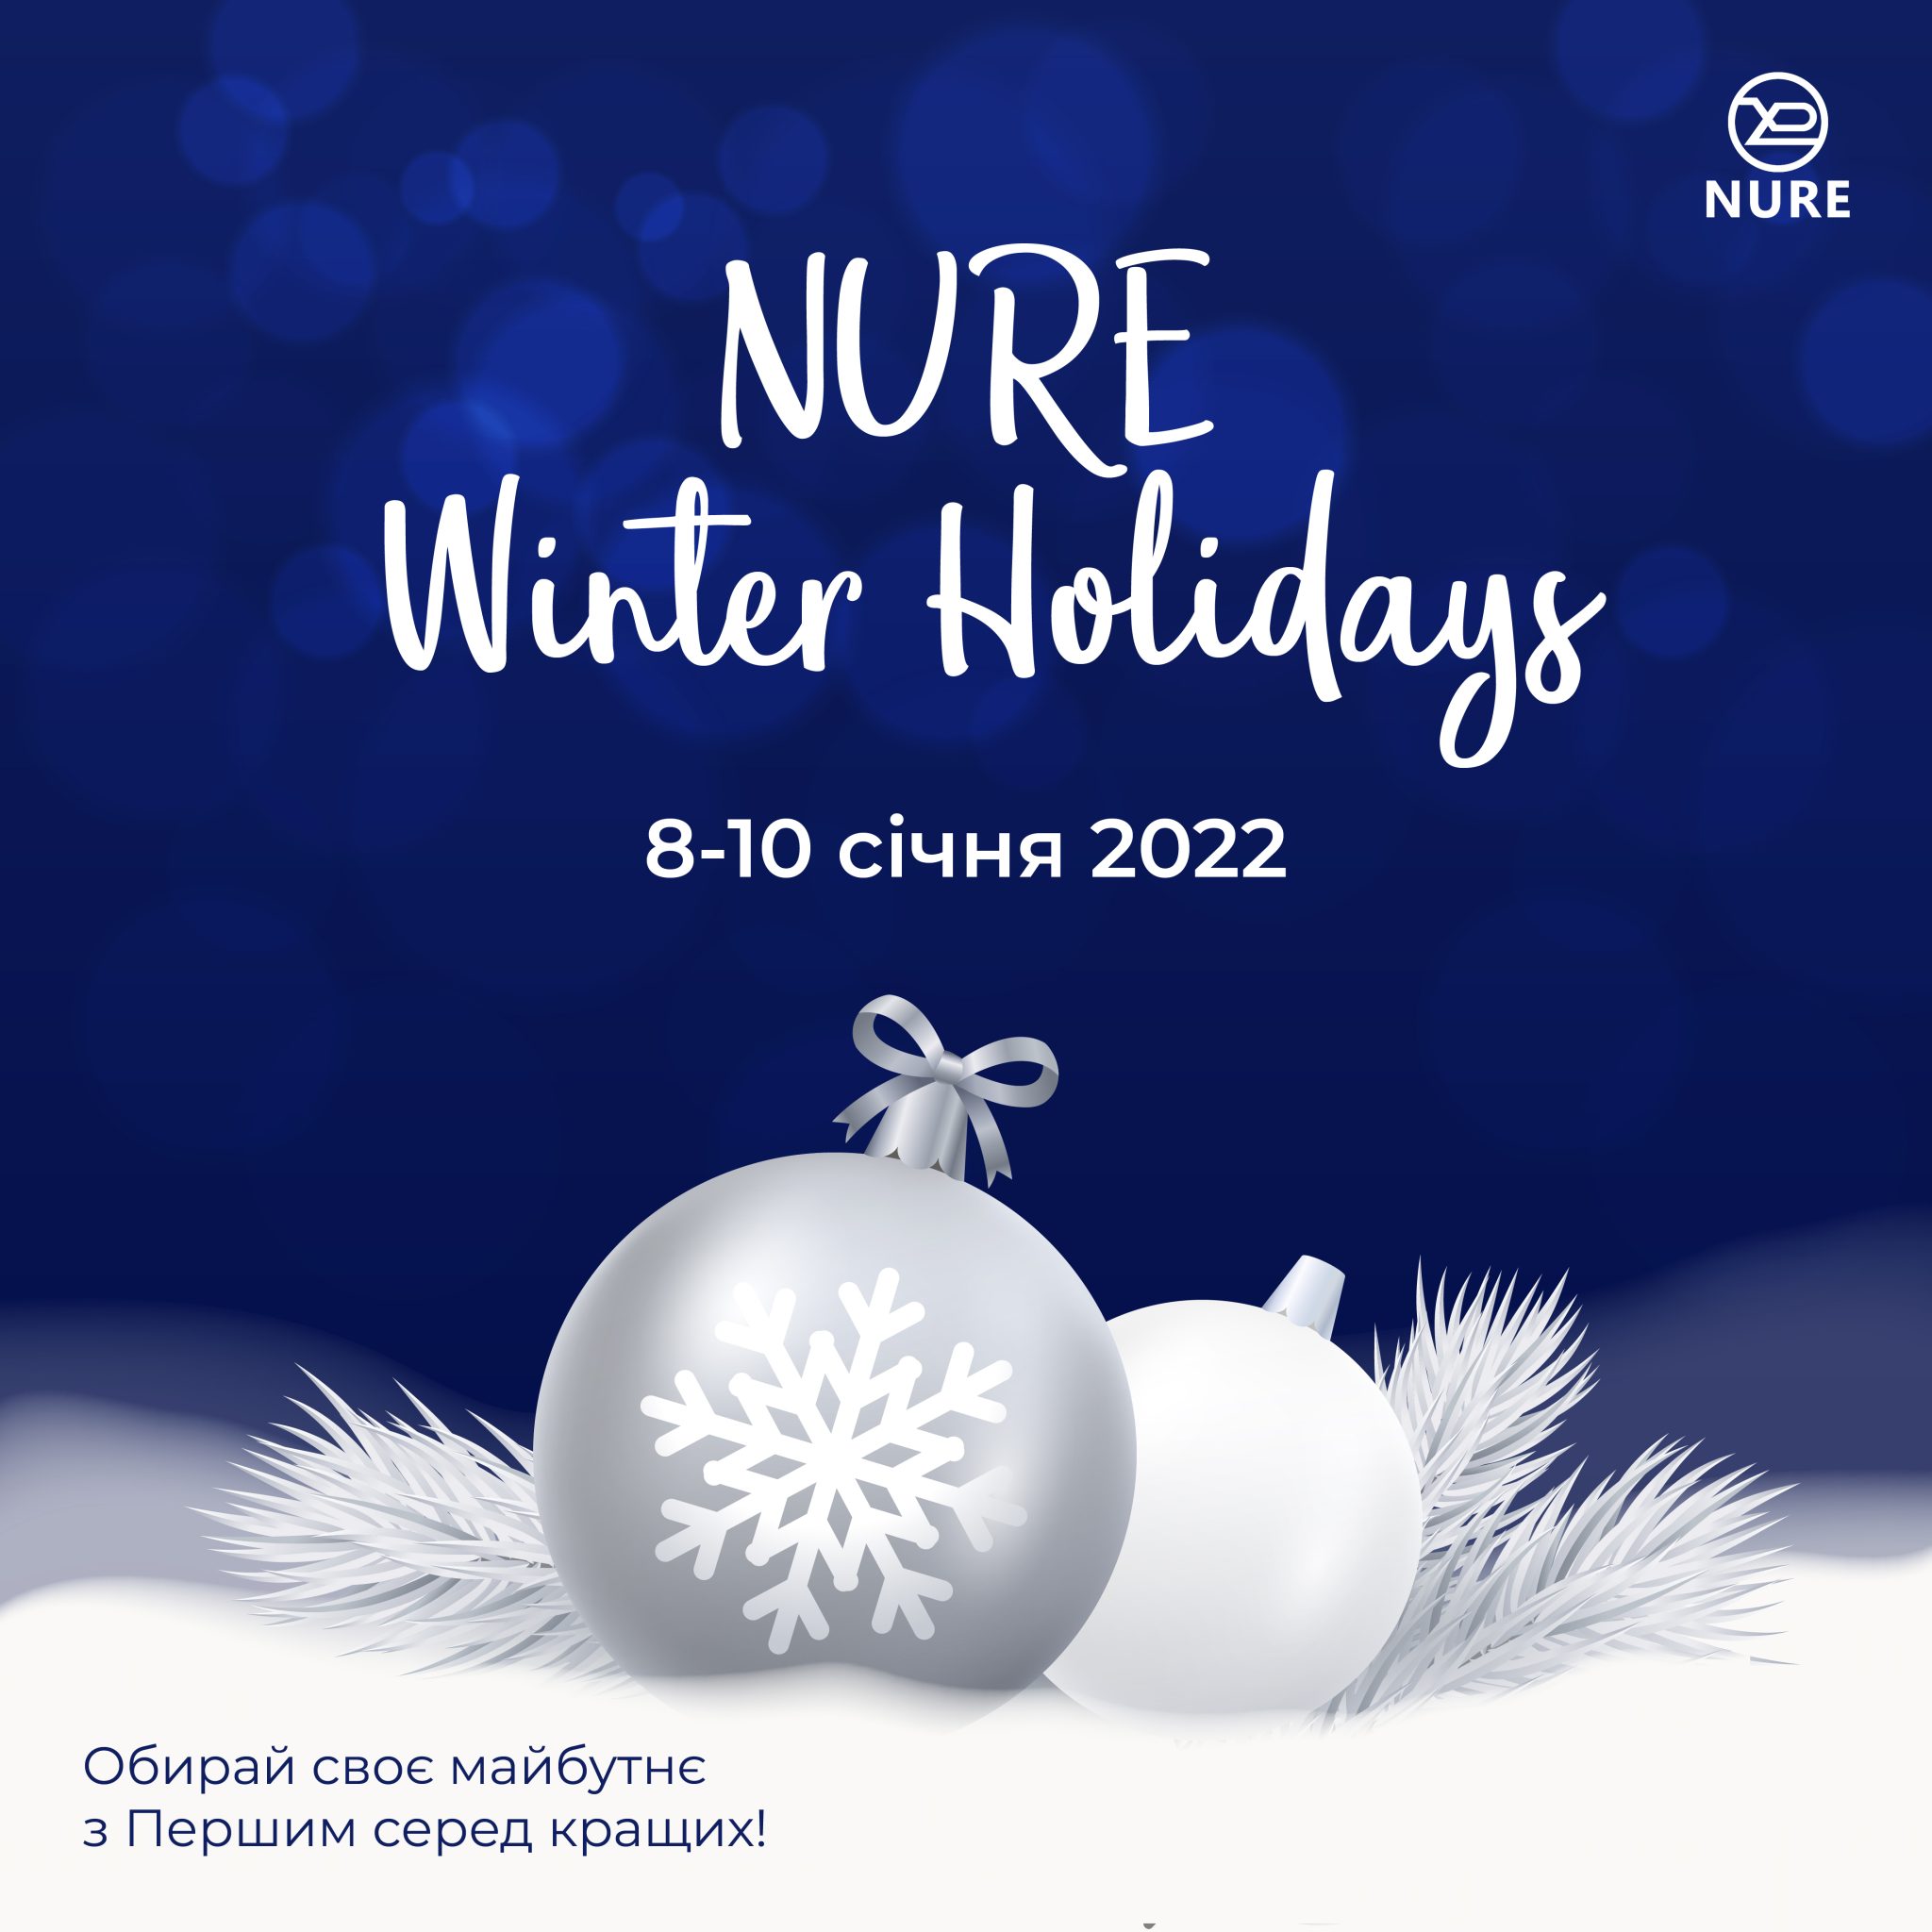 Nure Winter Holidays 2022 in NURE